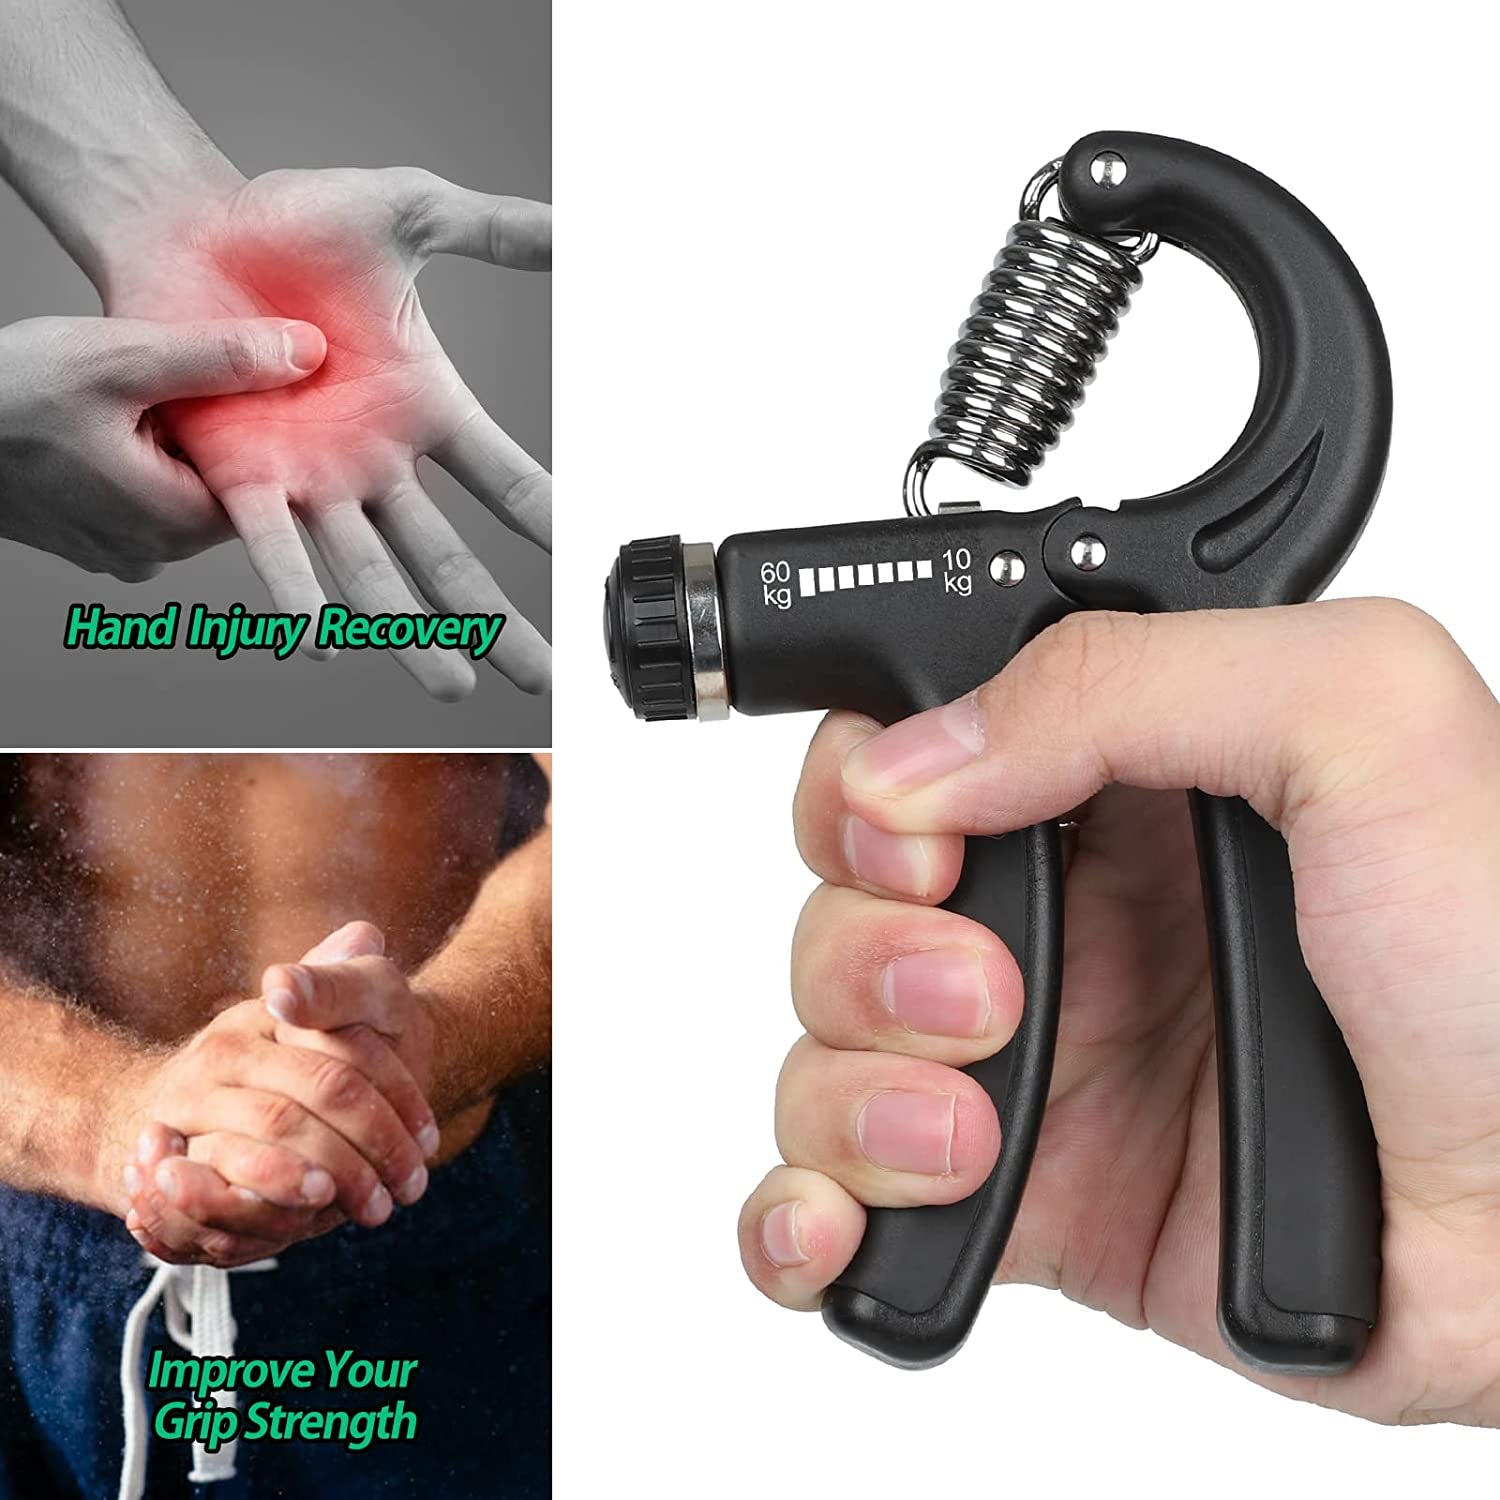 UltraGrip grip strength trainer